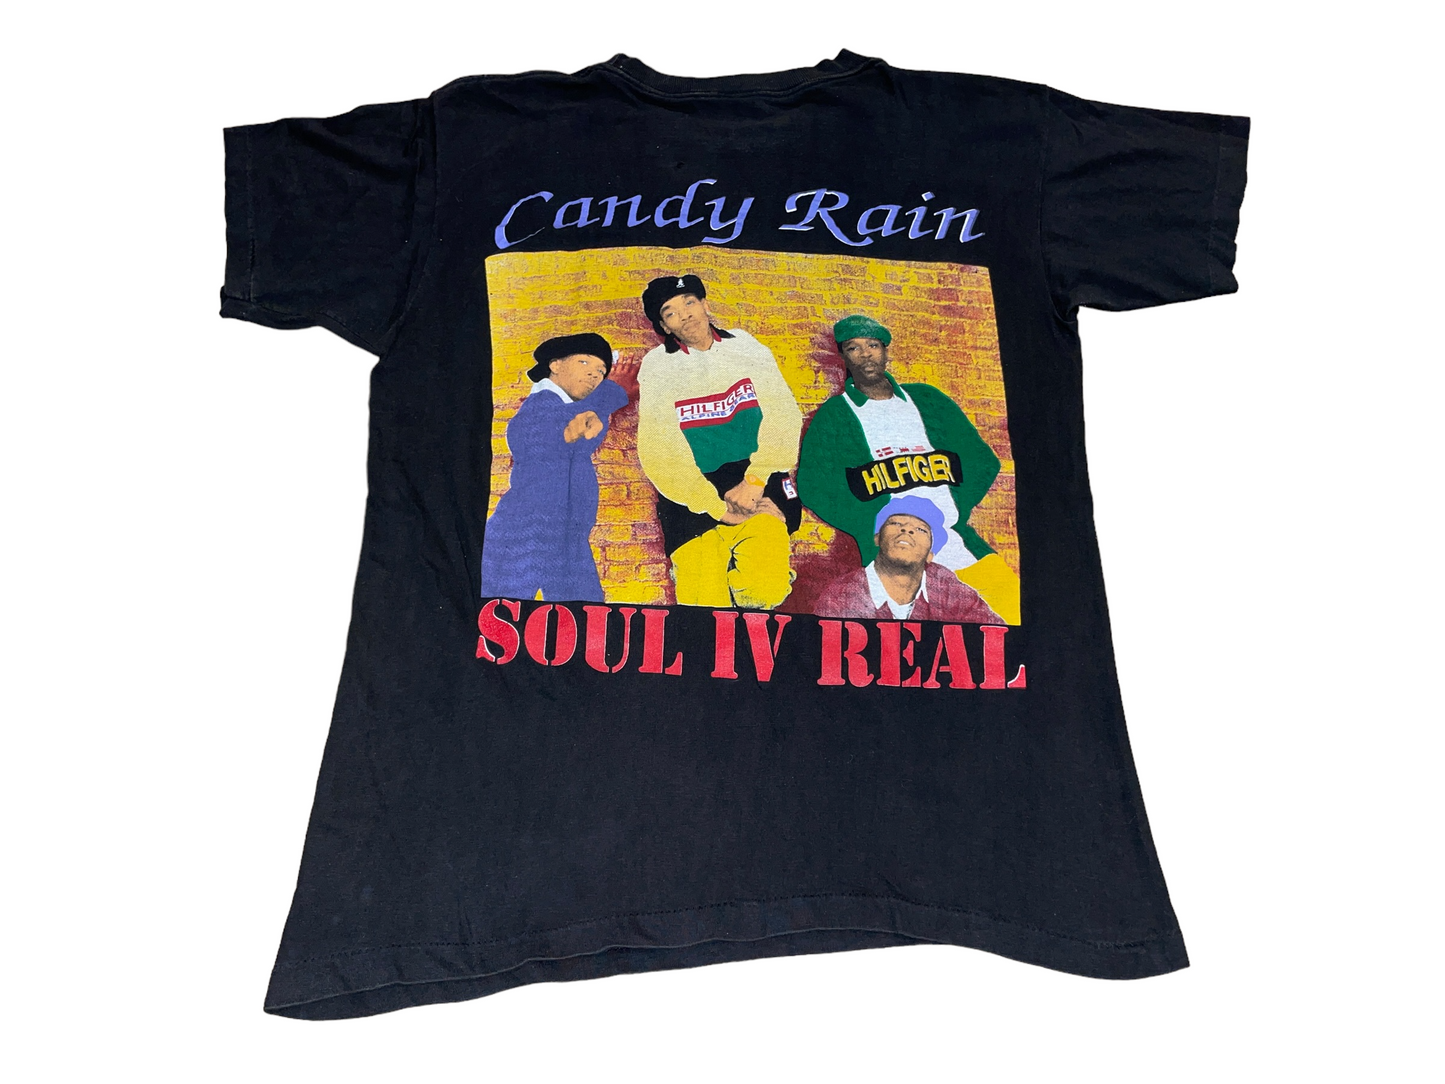 Vintage 90's Soul for Real T-Shirt